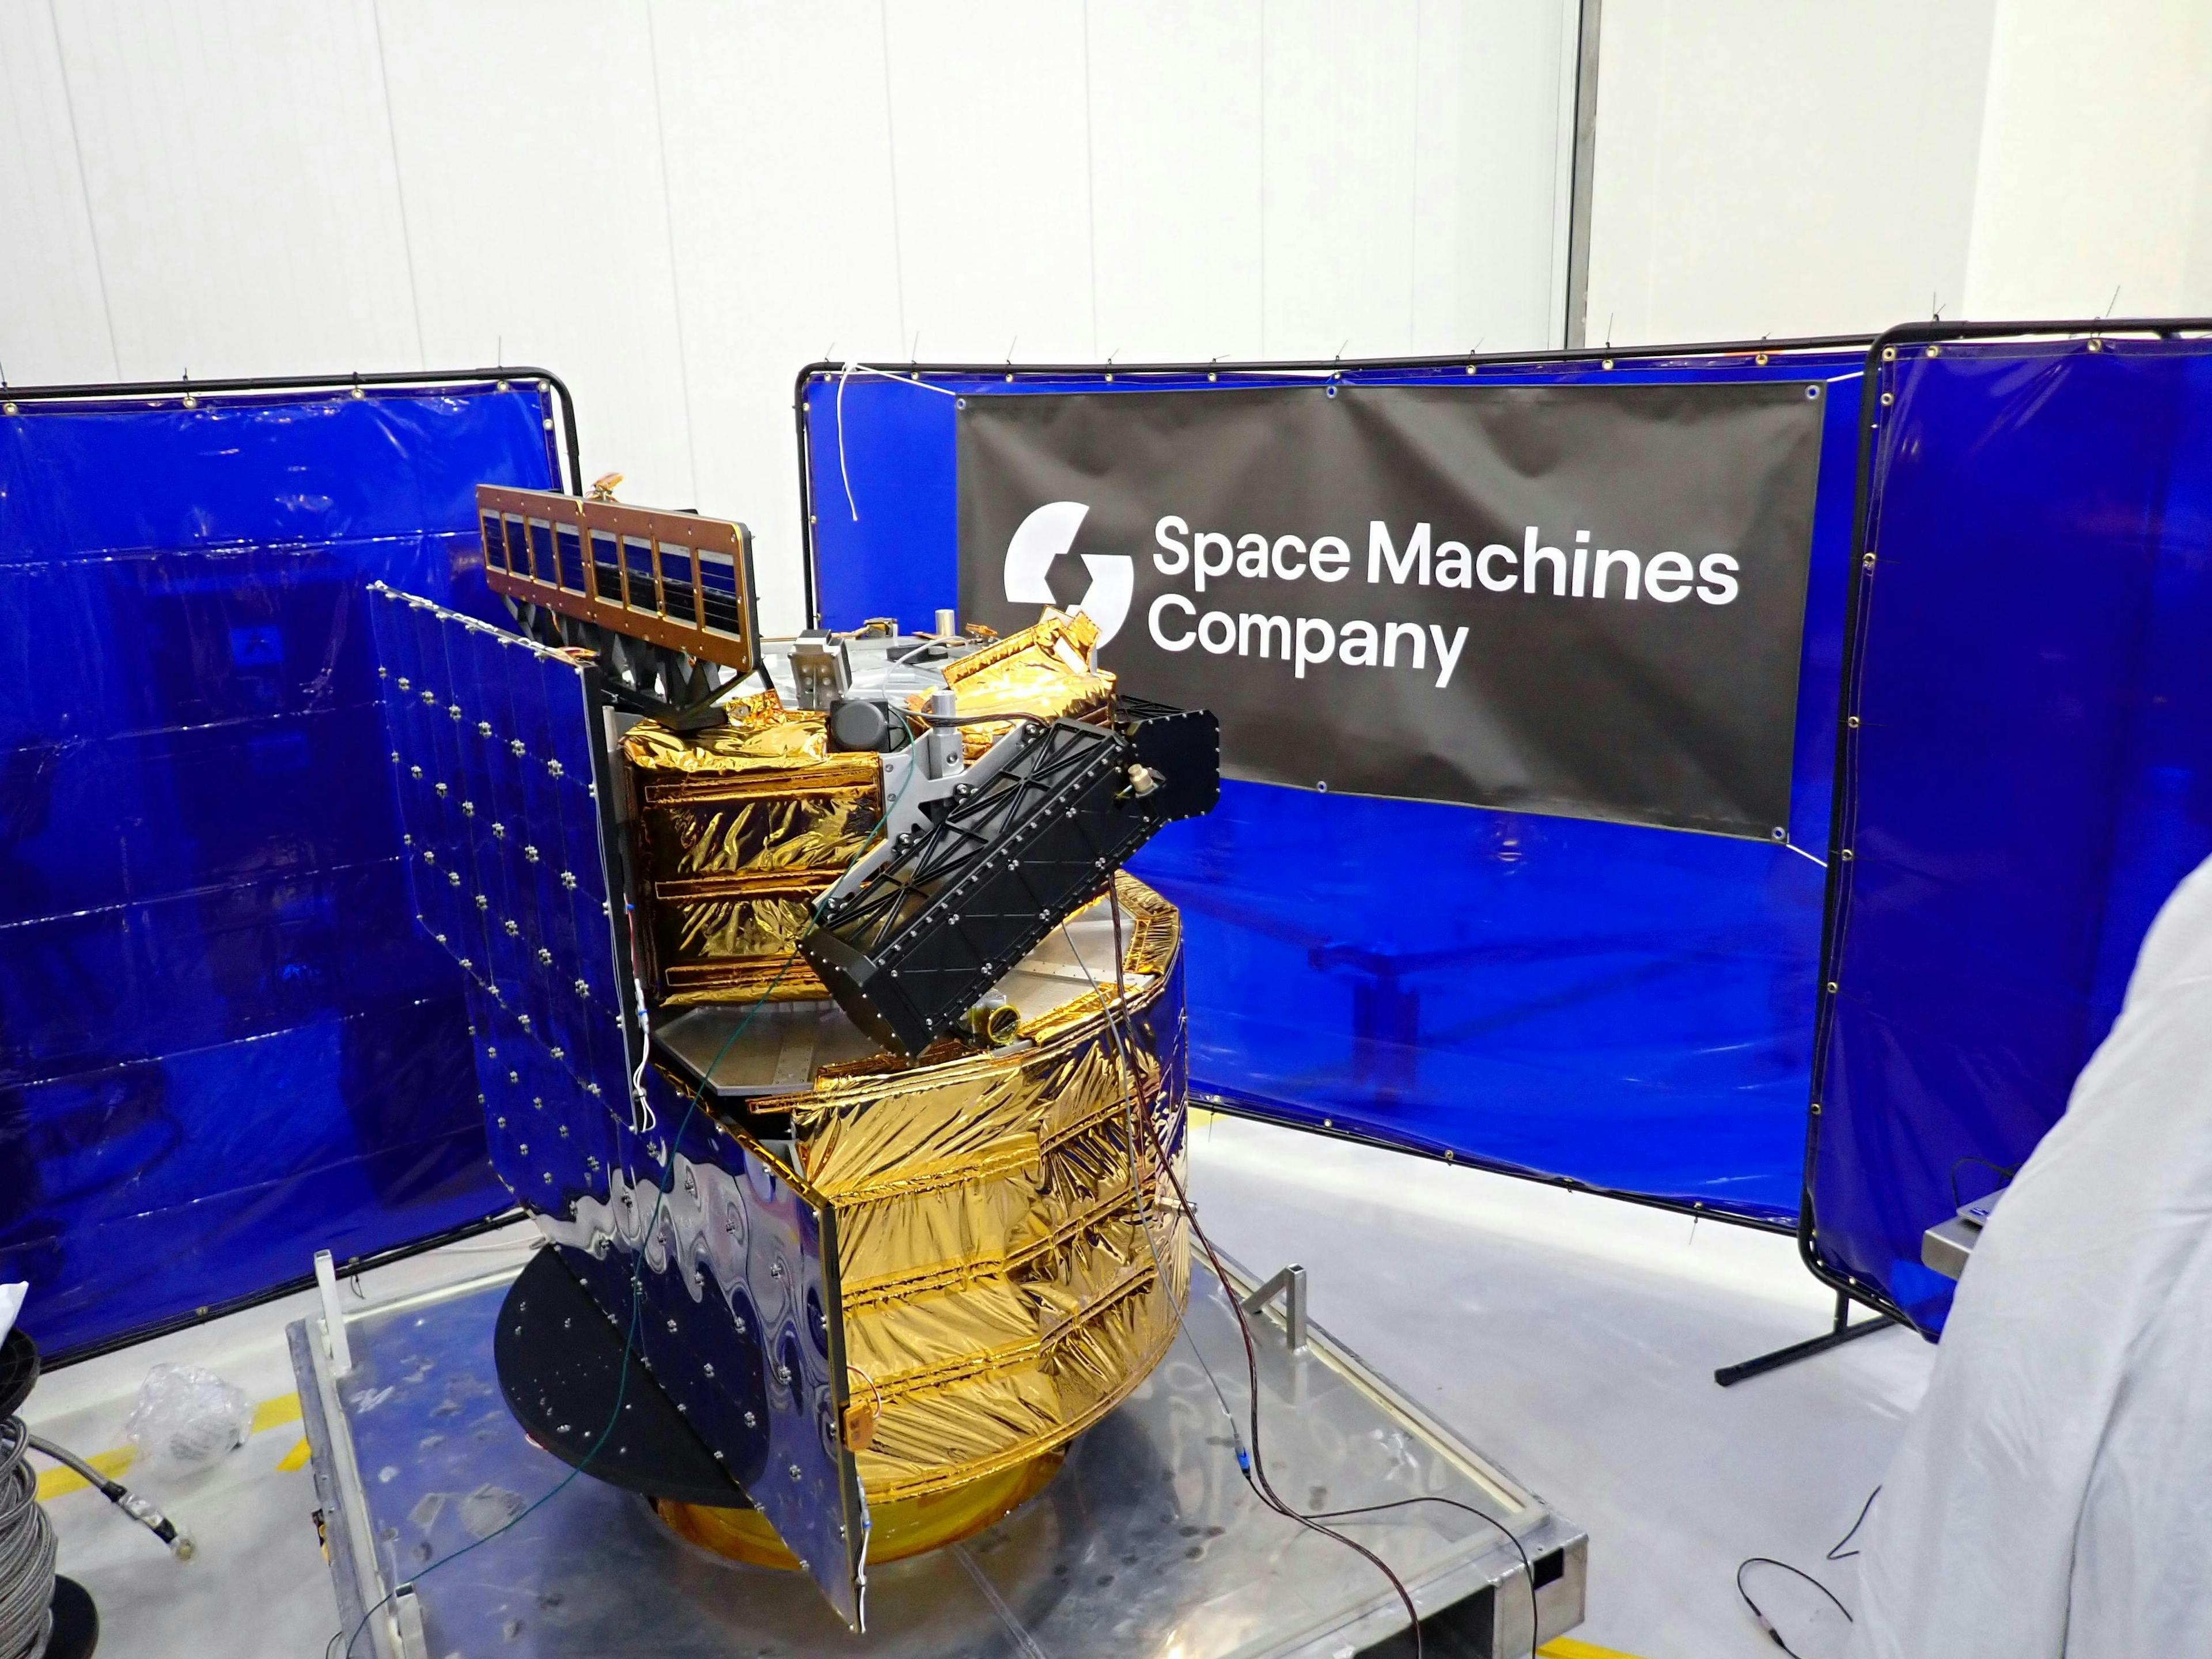 Space Machines adds Inovor Technologies’ Star Tracker